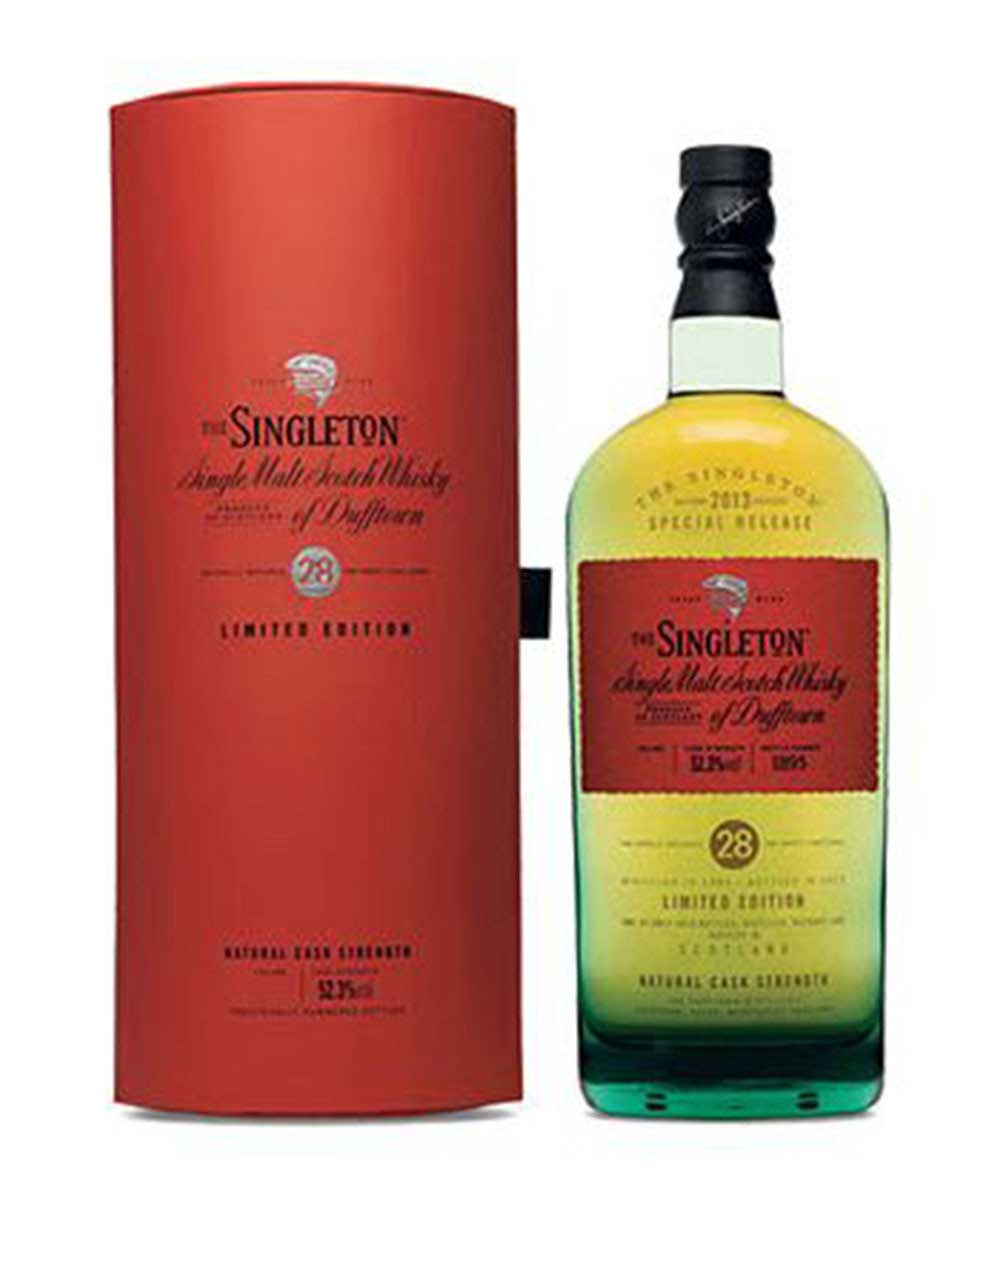 The Singleton of Dufftown 28 Year Old Single Malt Scotch Whisky